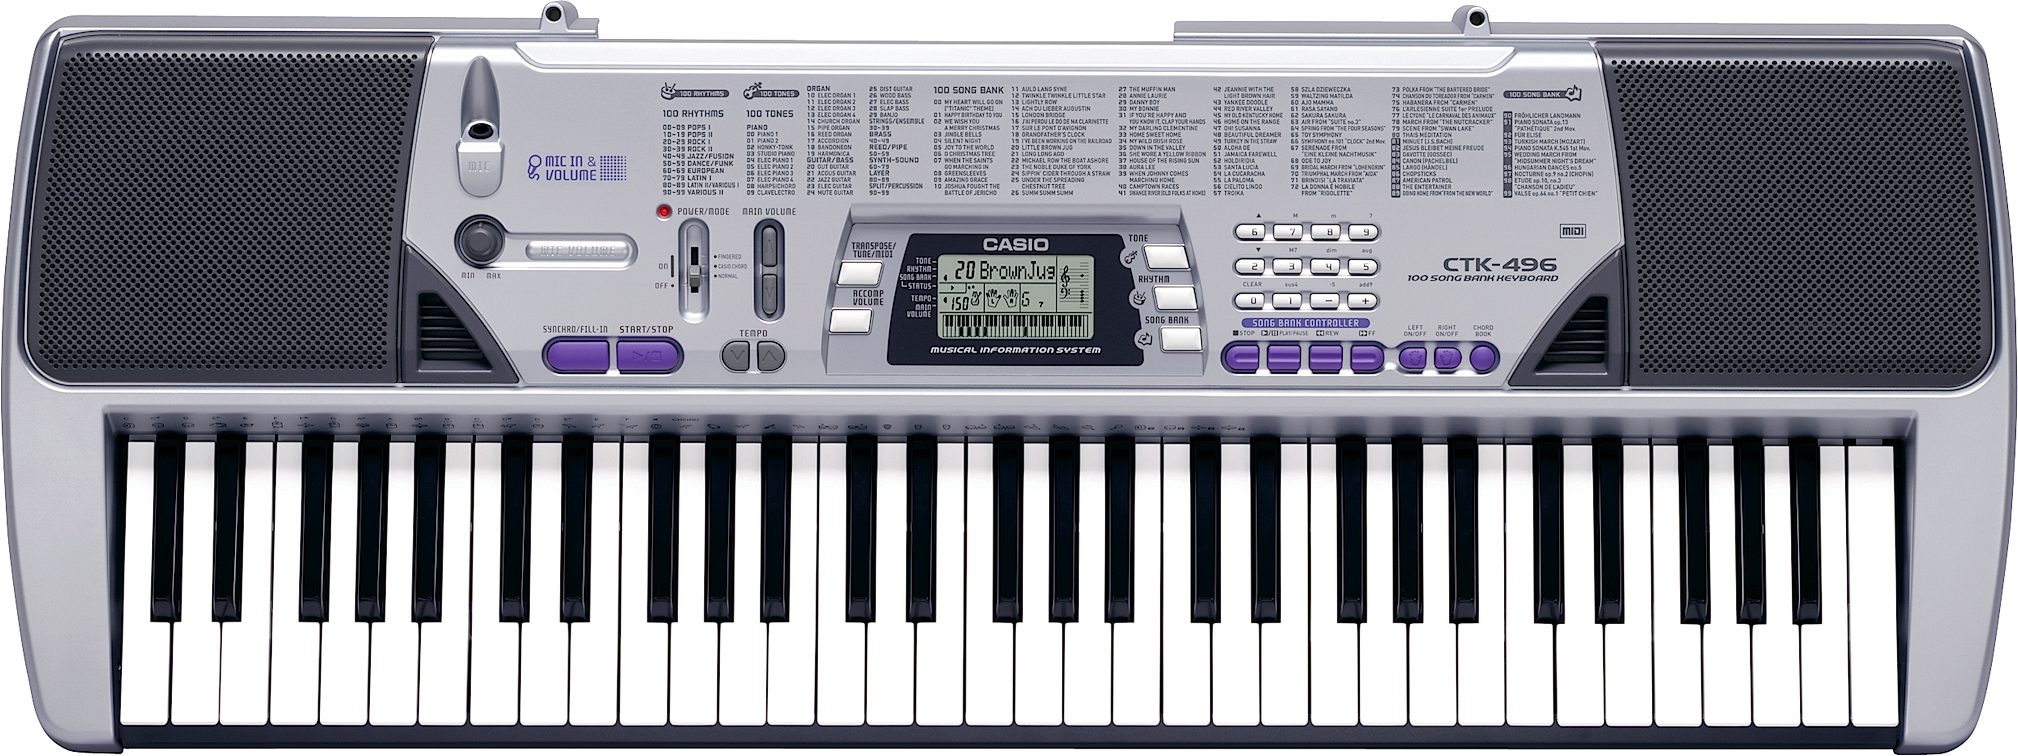 Casio CTK-496 Keyboard | zZounds